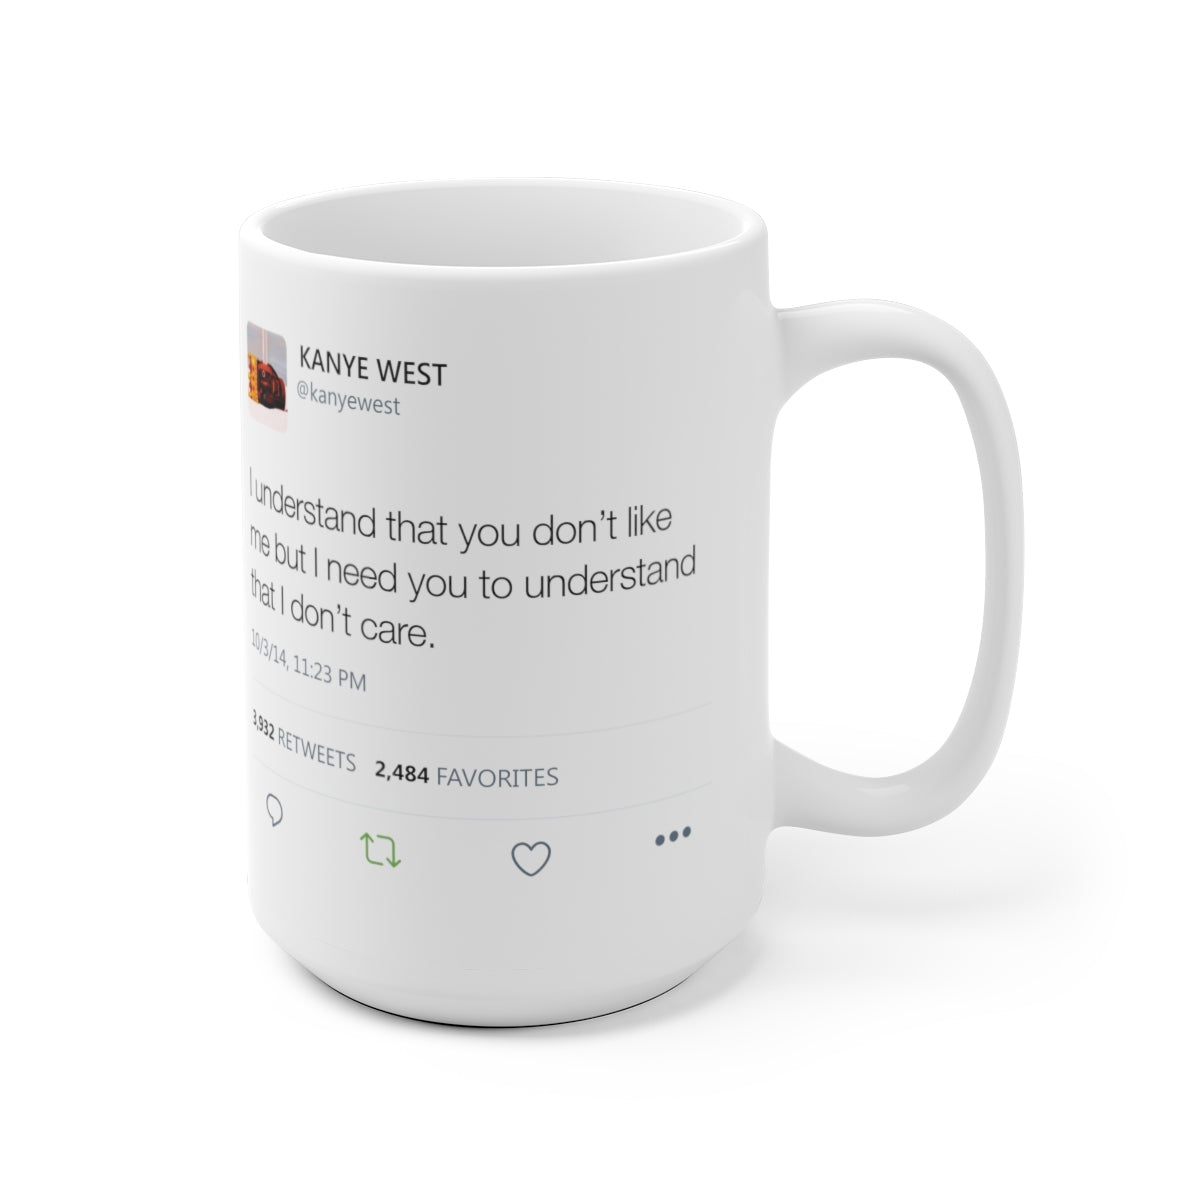 I understand that you don't like me but I need you to understand that I don't care - Kanye West Tweet Mug-Archethype